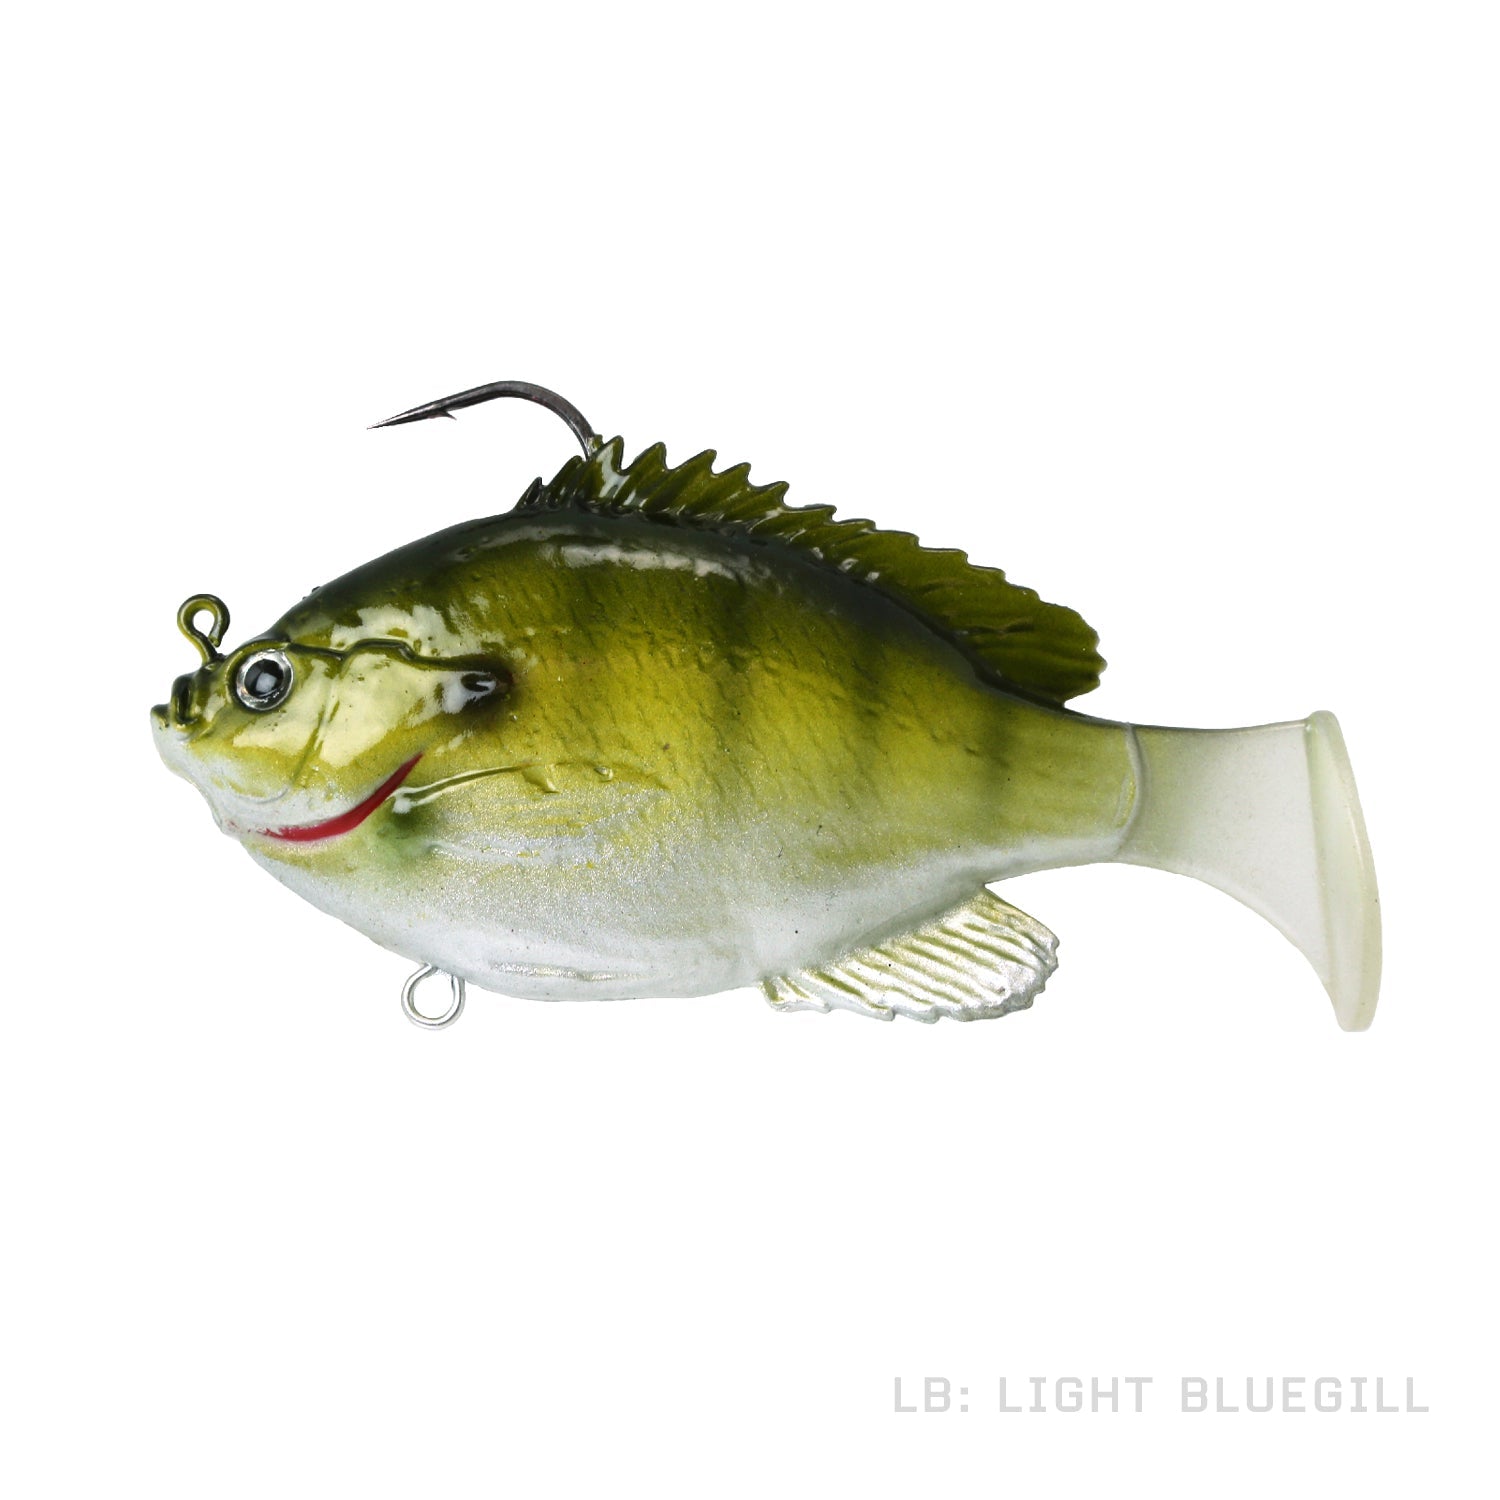 FishLab - Bio-Gill Rigged Swimbaits